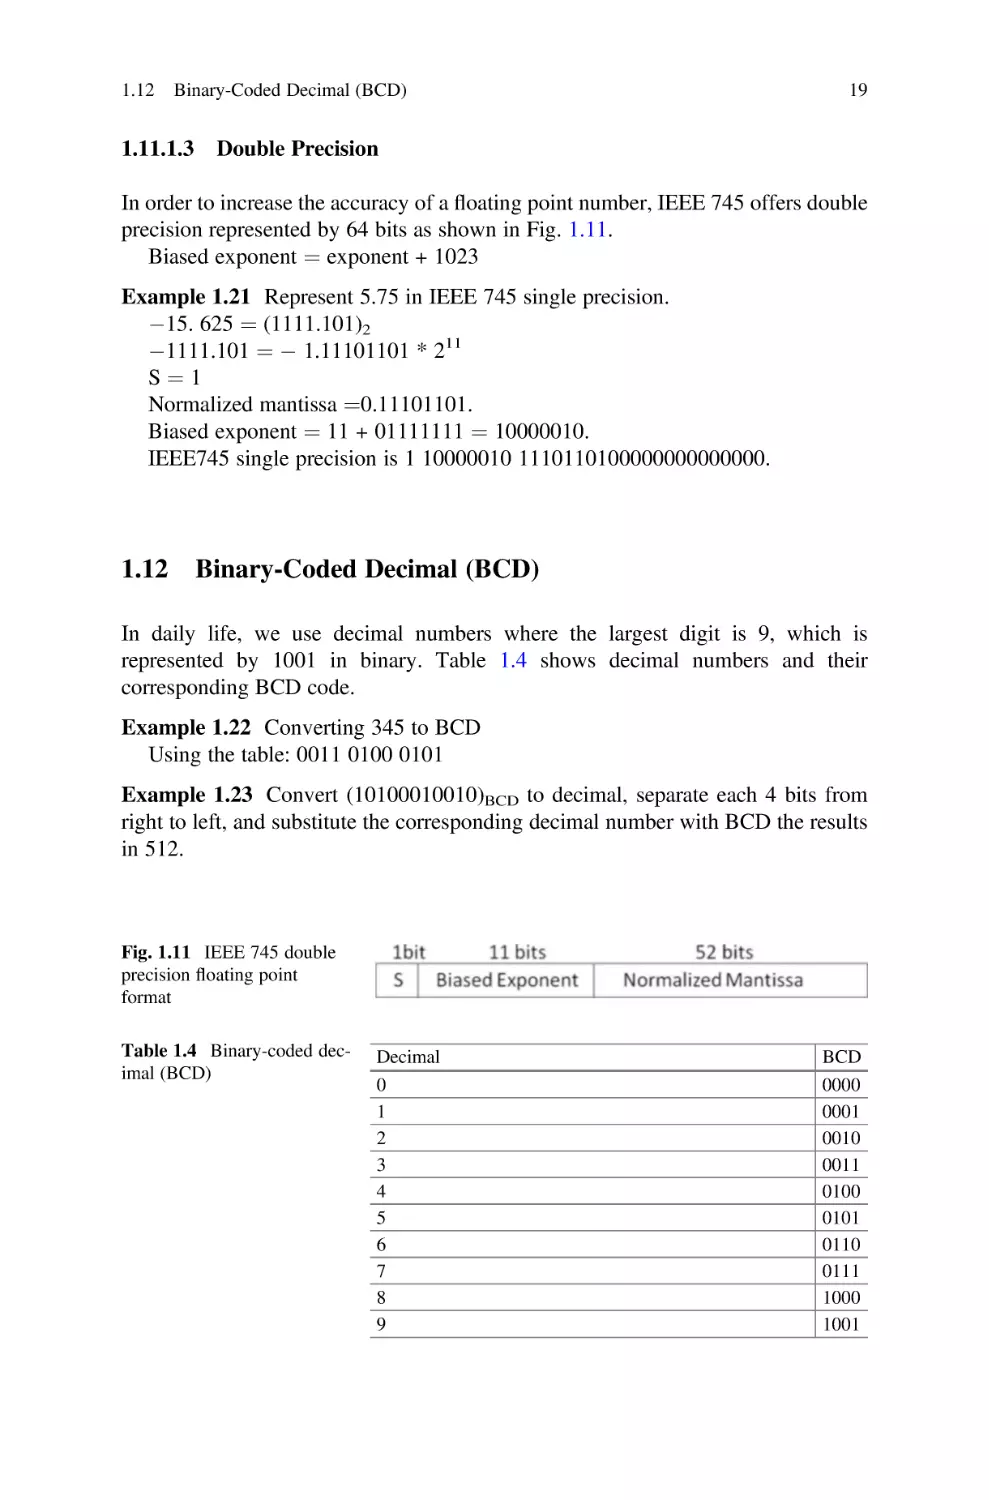 1.11.1.3 Double Precision
1.12 Binary-Coded Decimal (BCD)